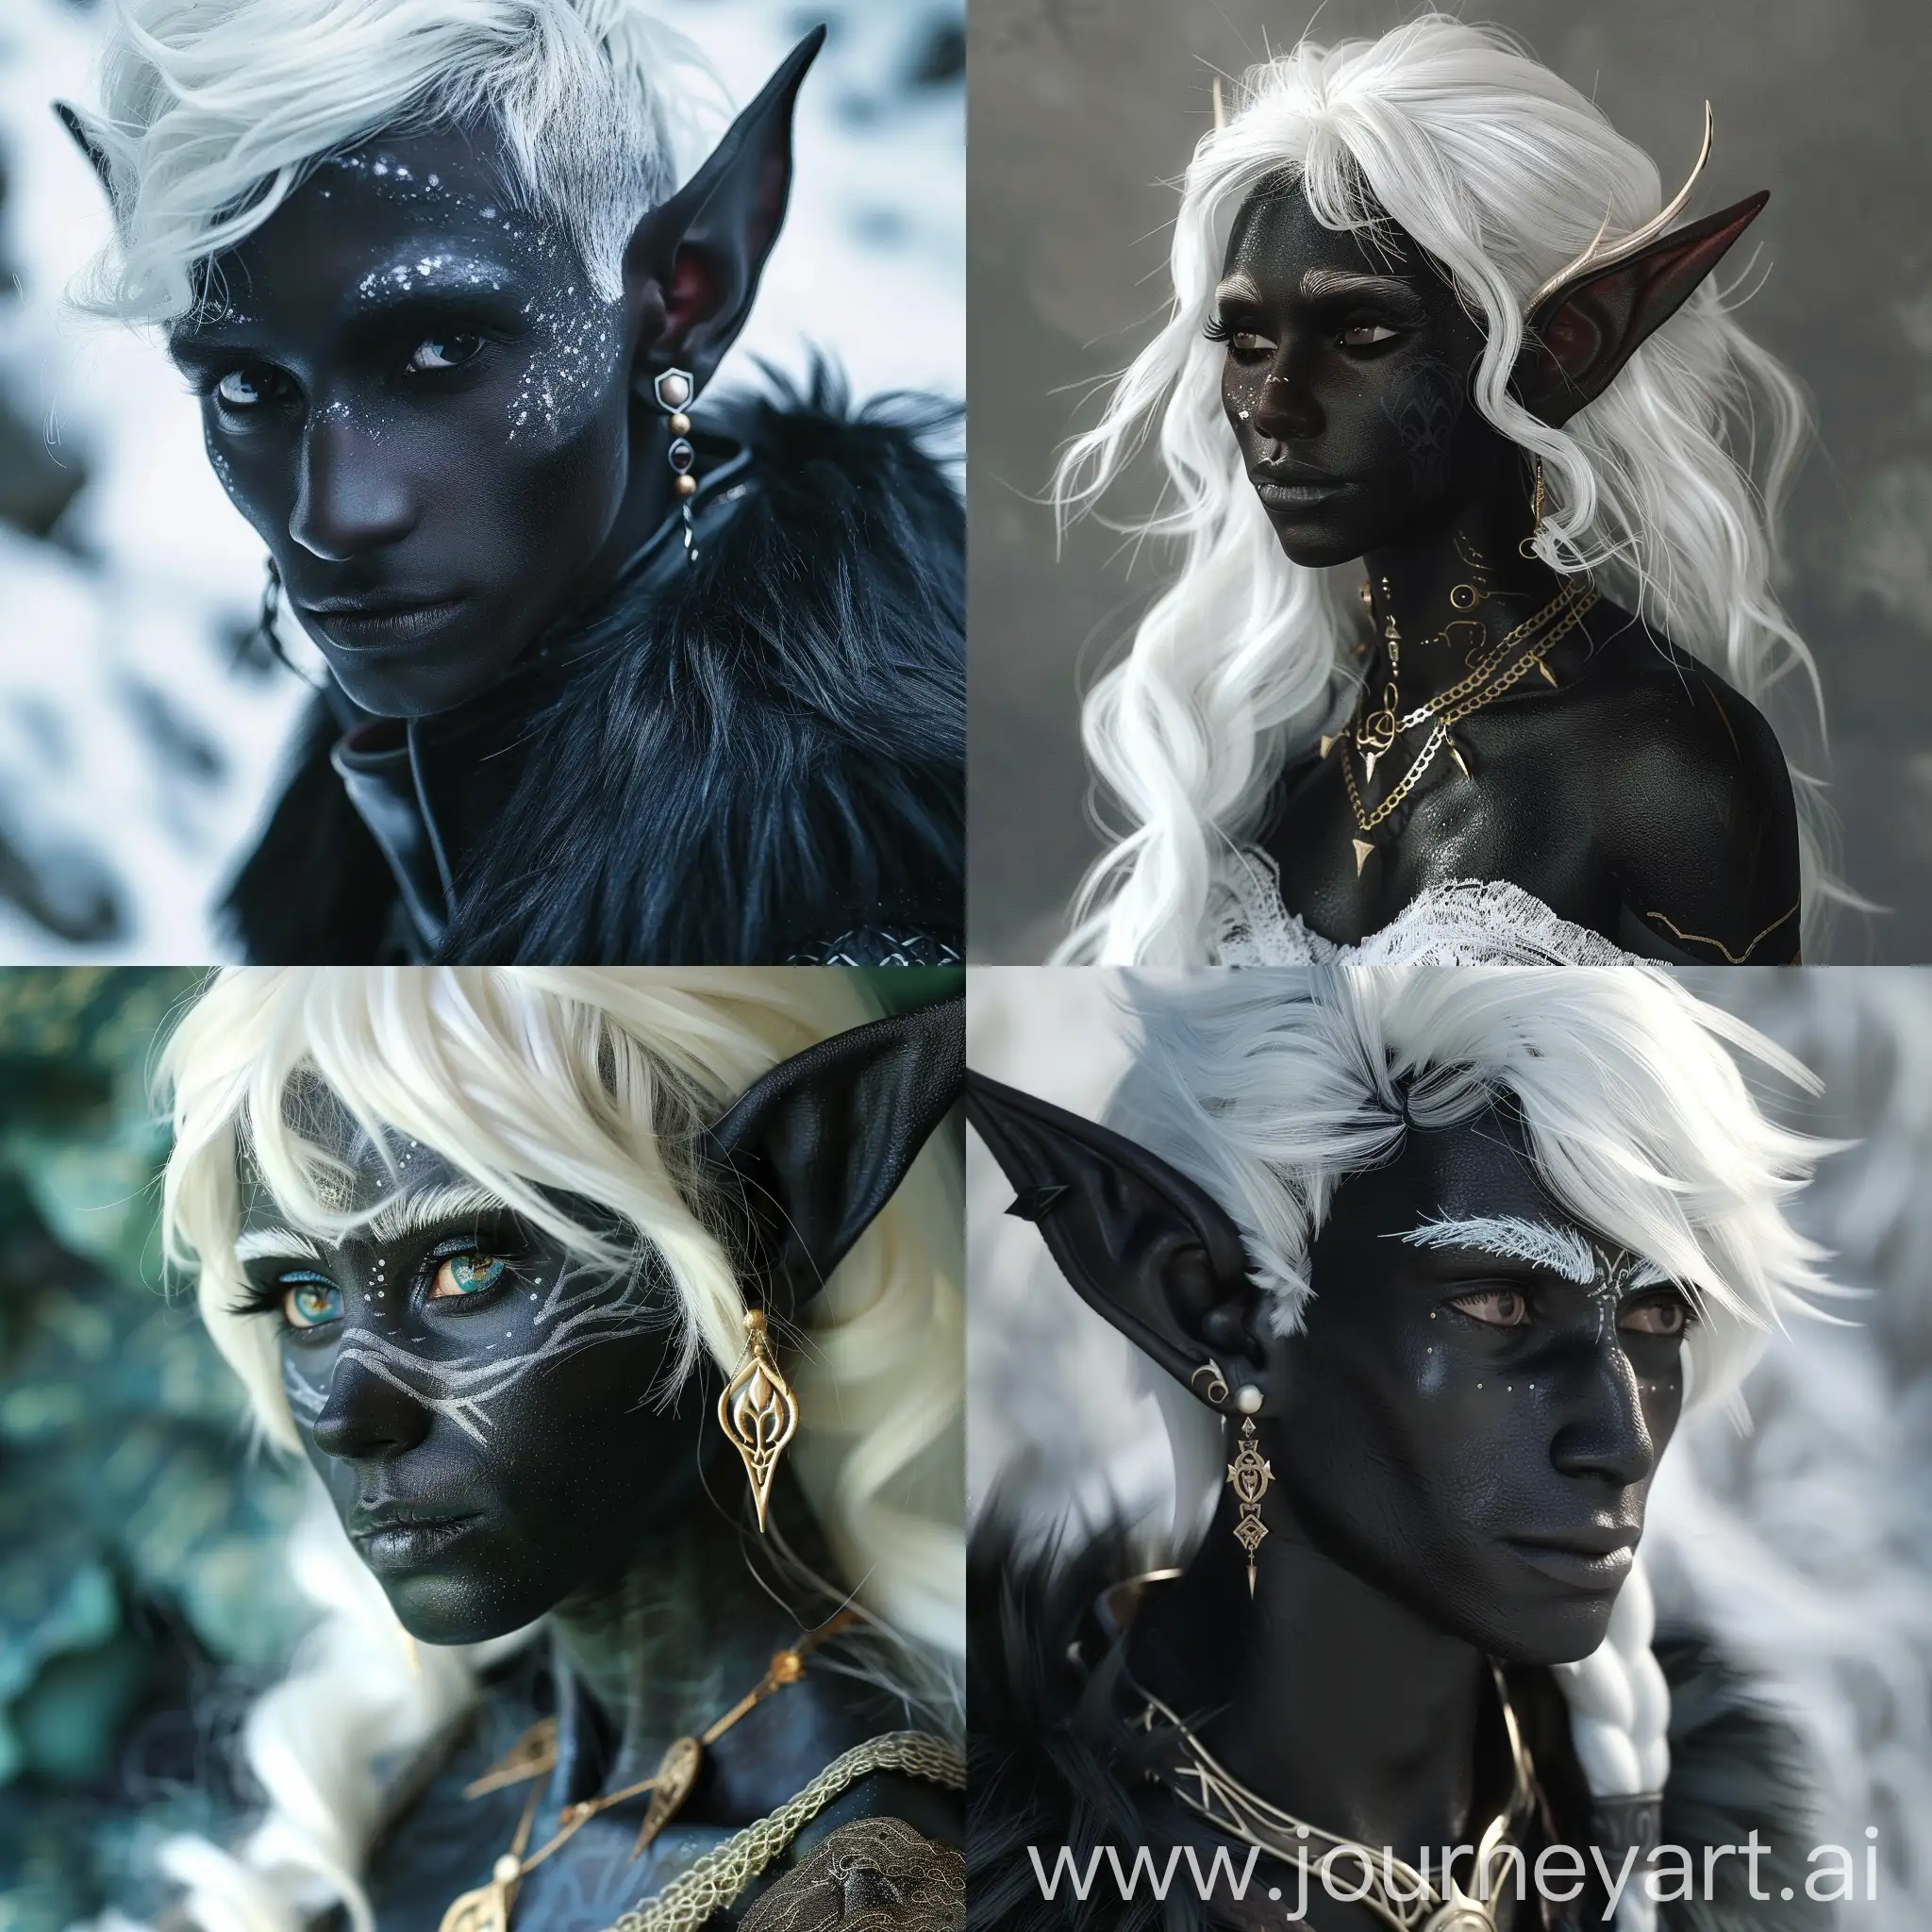 Mystical-Black-Elf-with-Elegant-White-Hair-Portrait